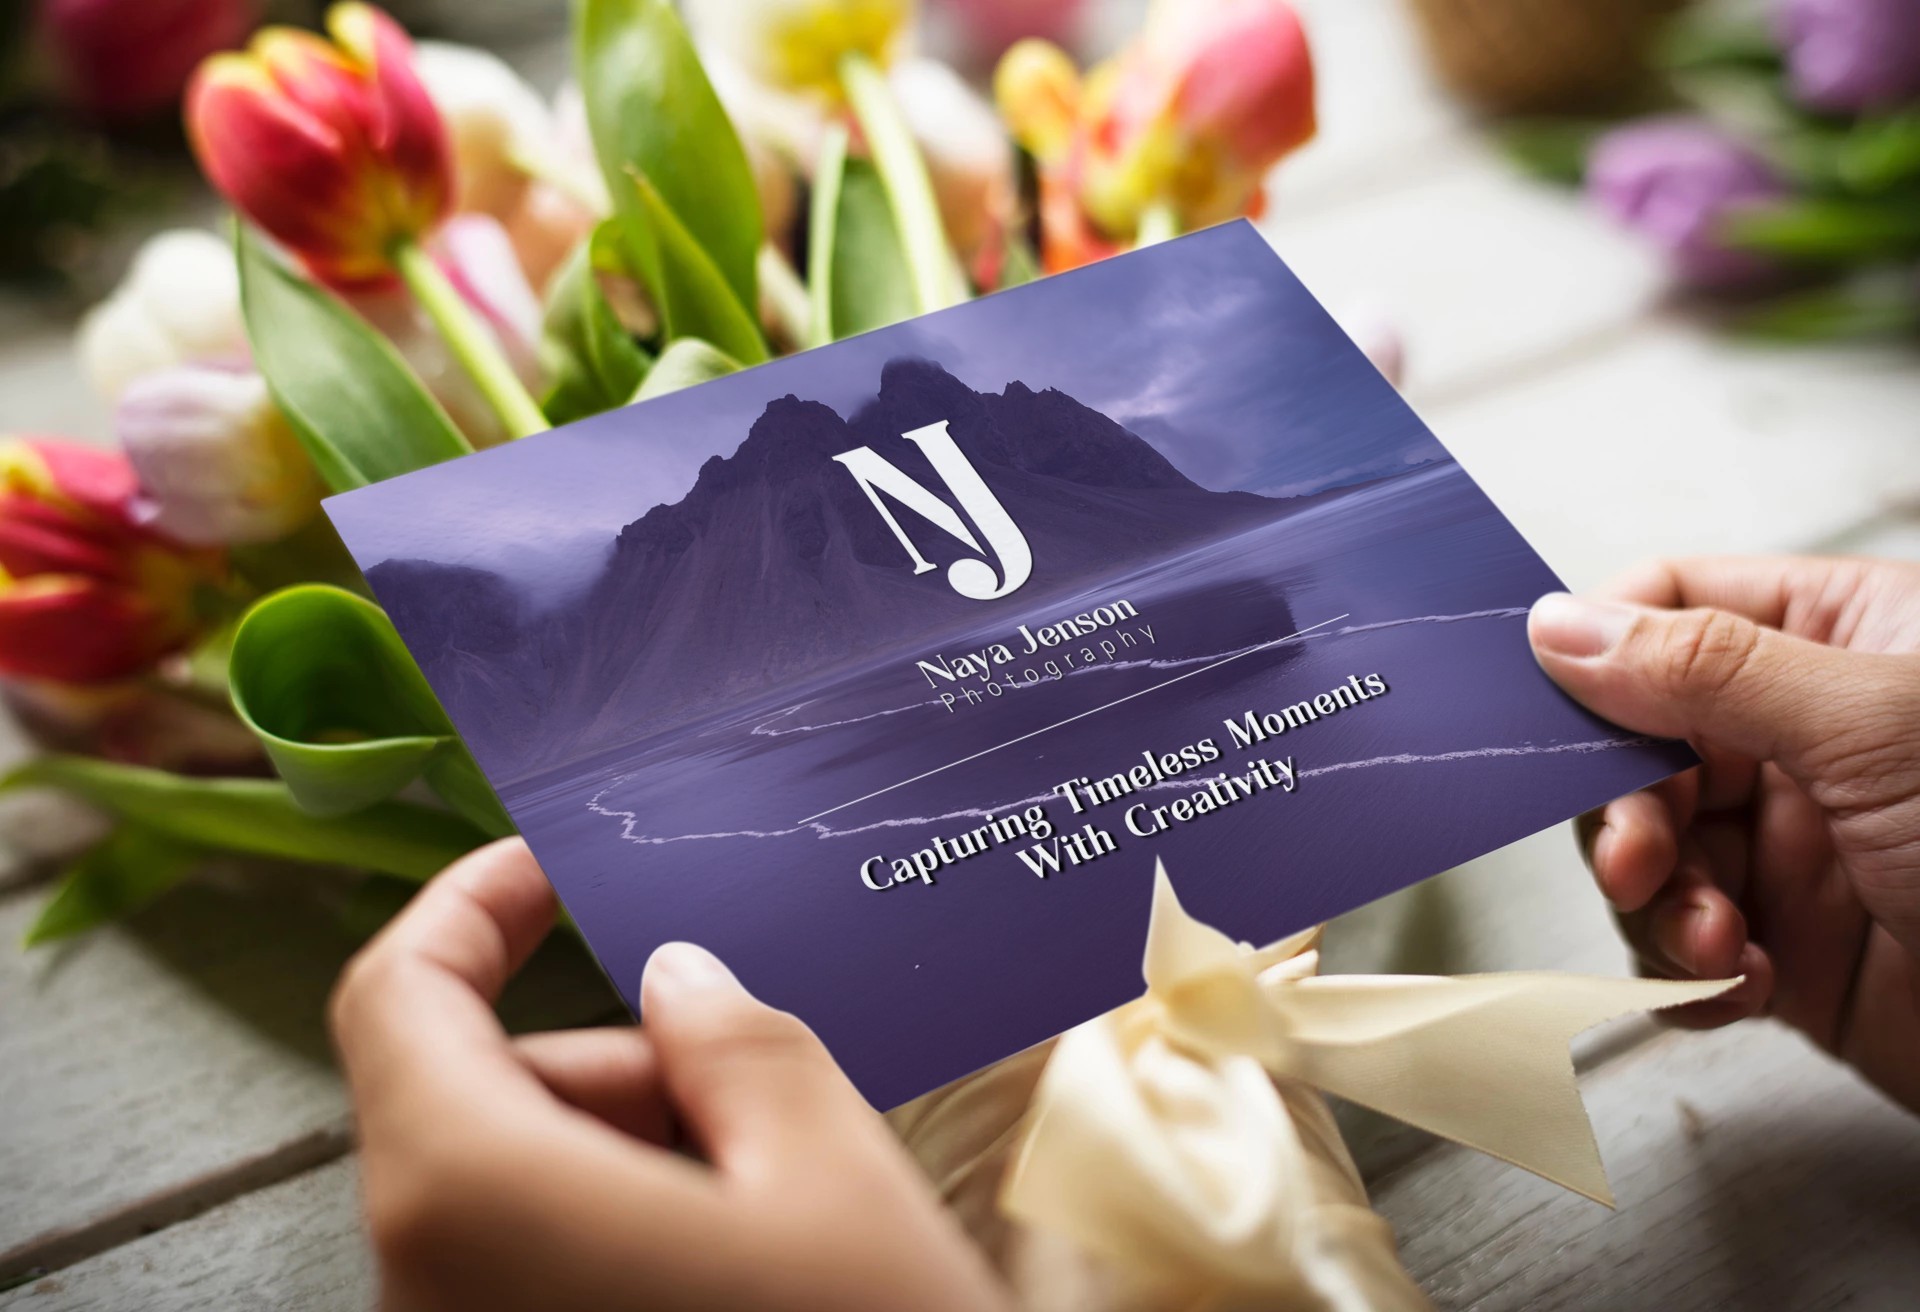 Naya Jenson Potography - The Logo Creative